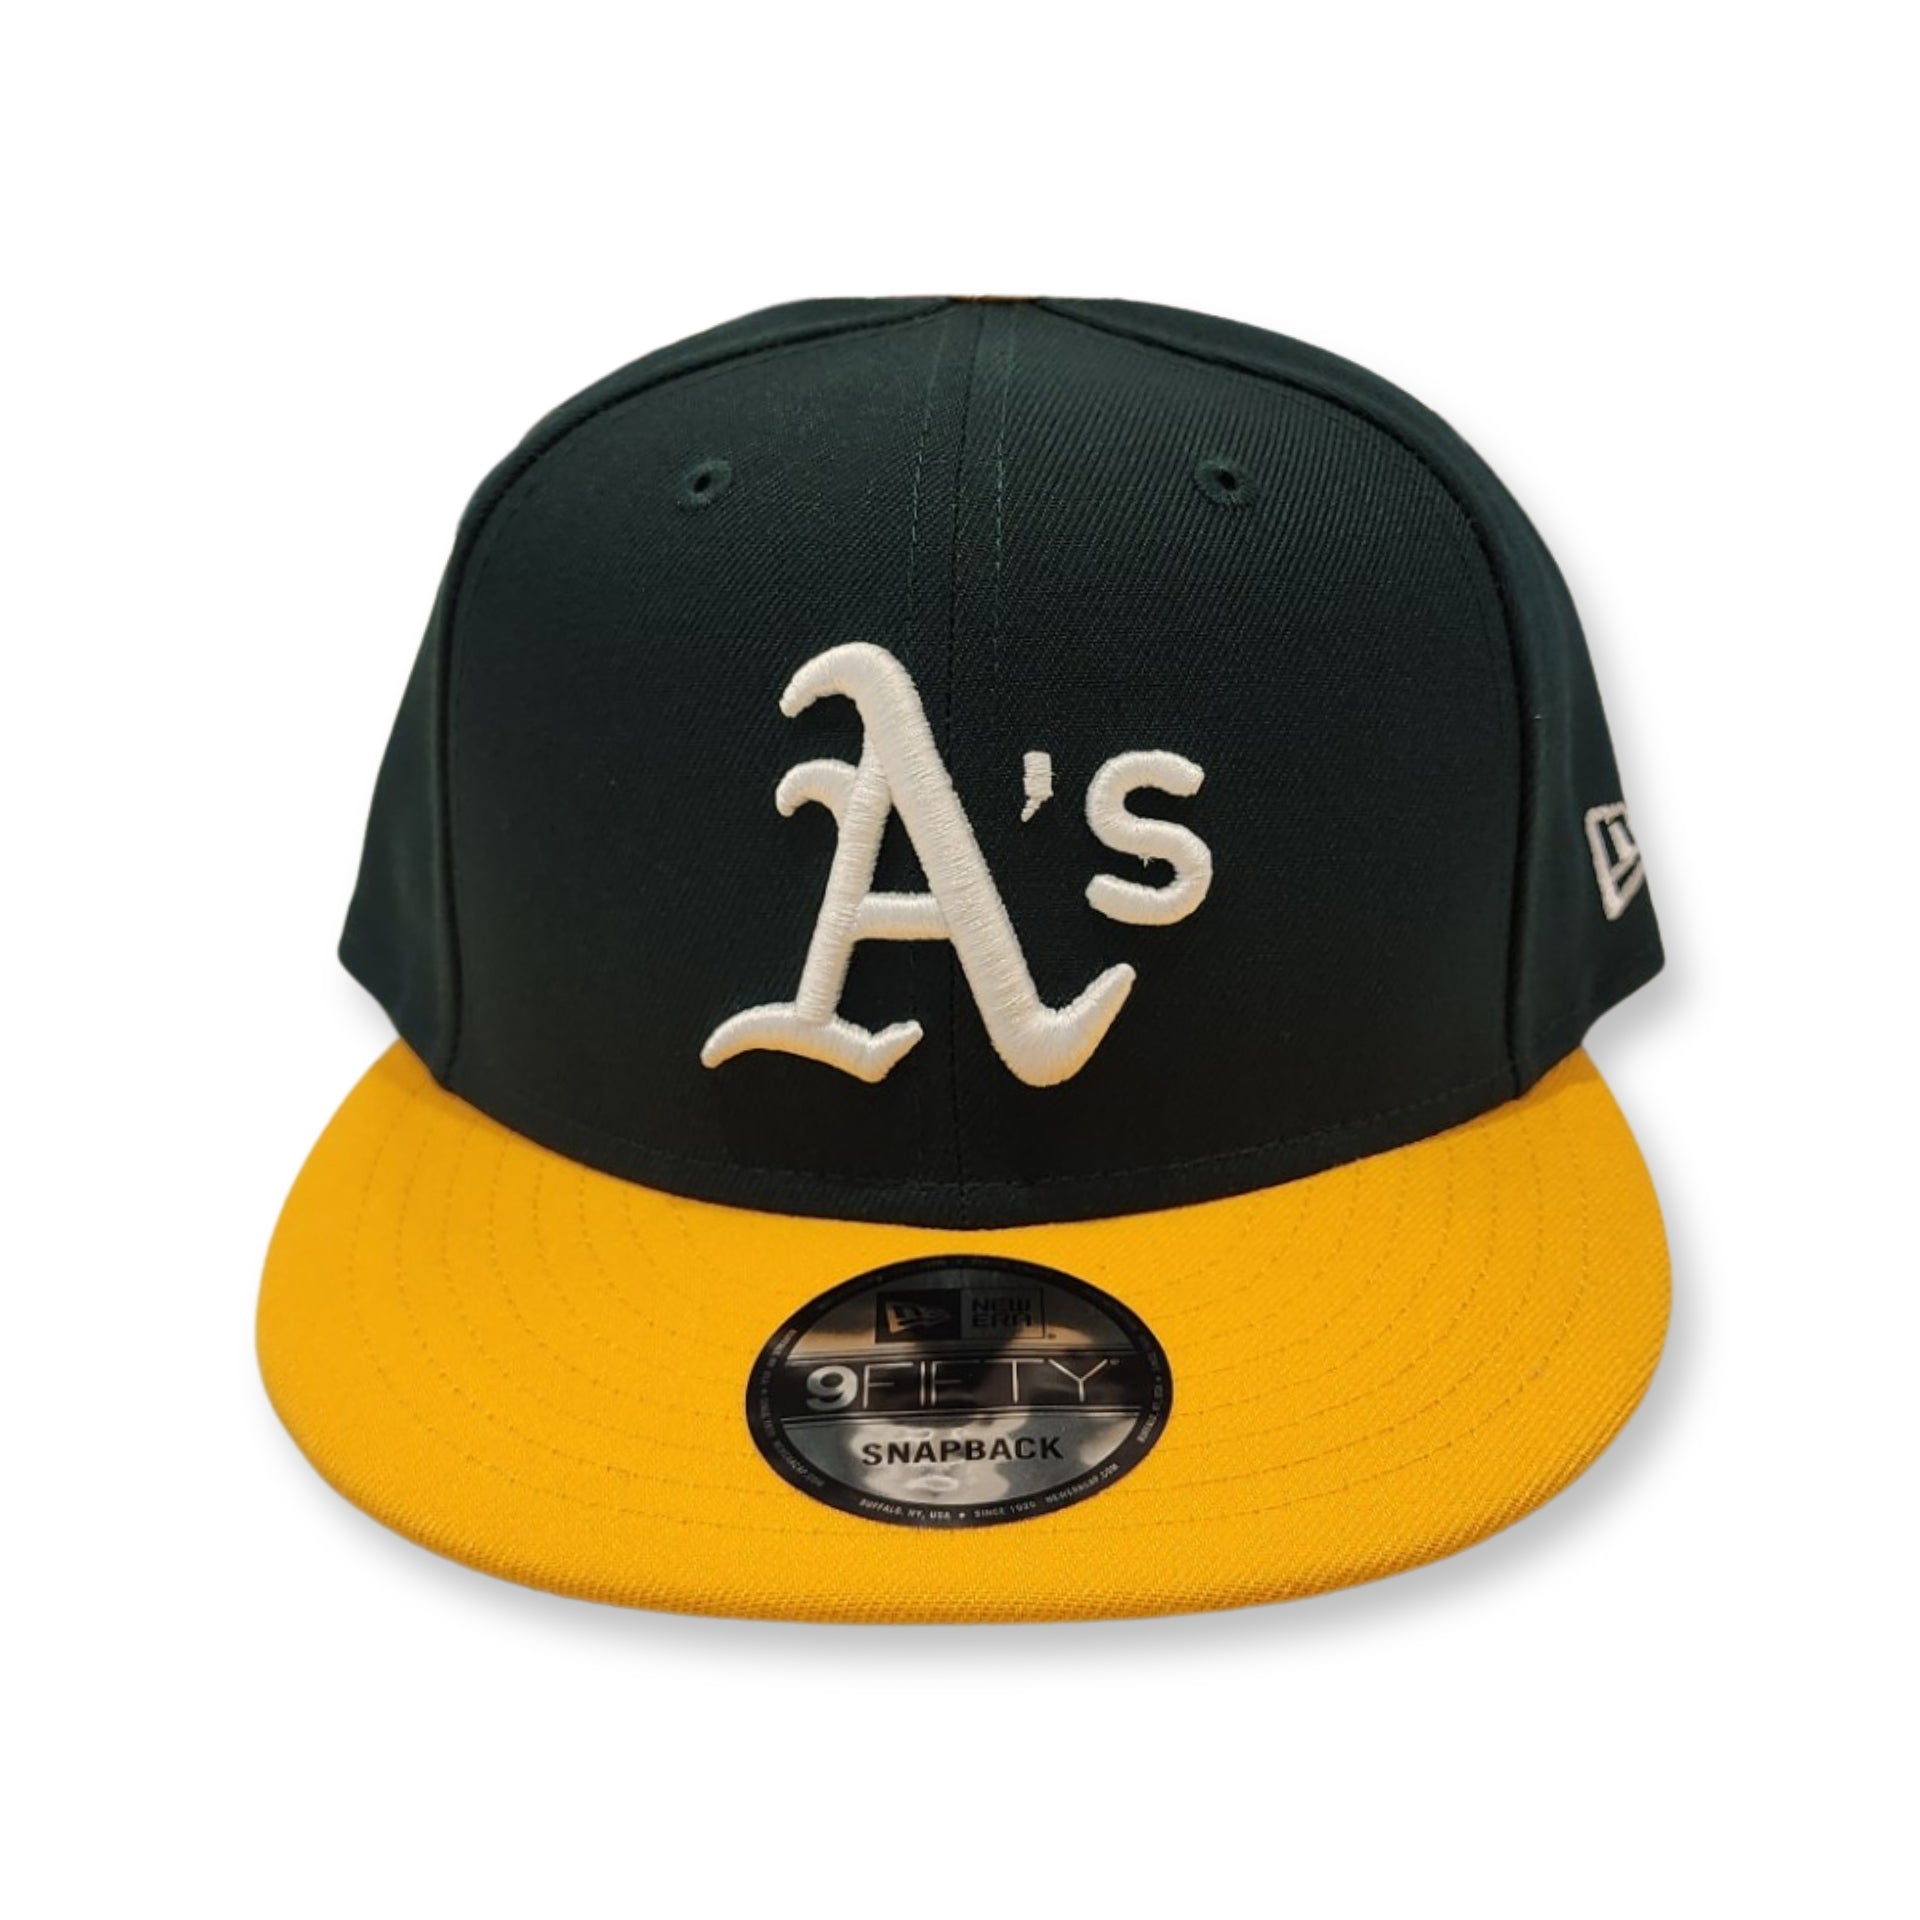 New Era 9fifty Oakland A's hat Snapback Green